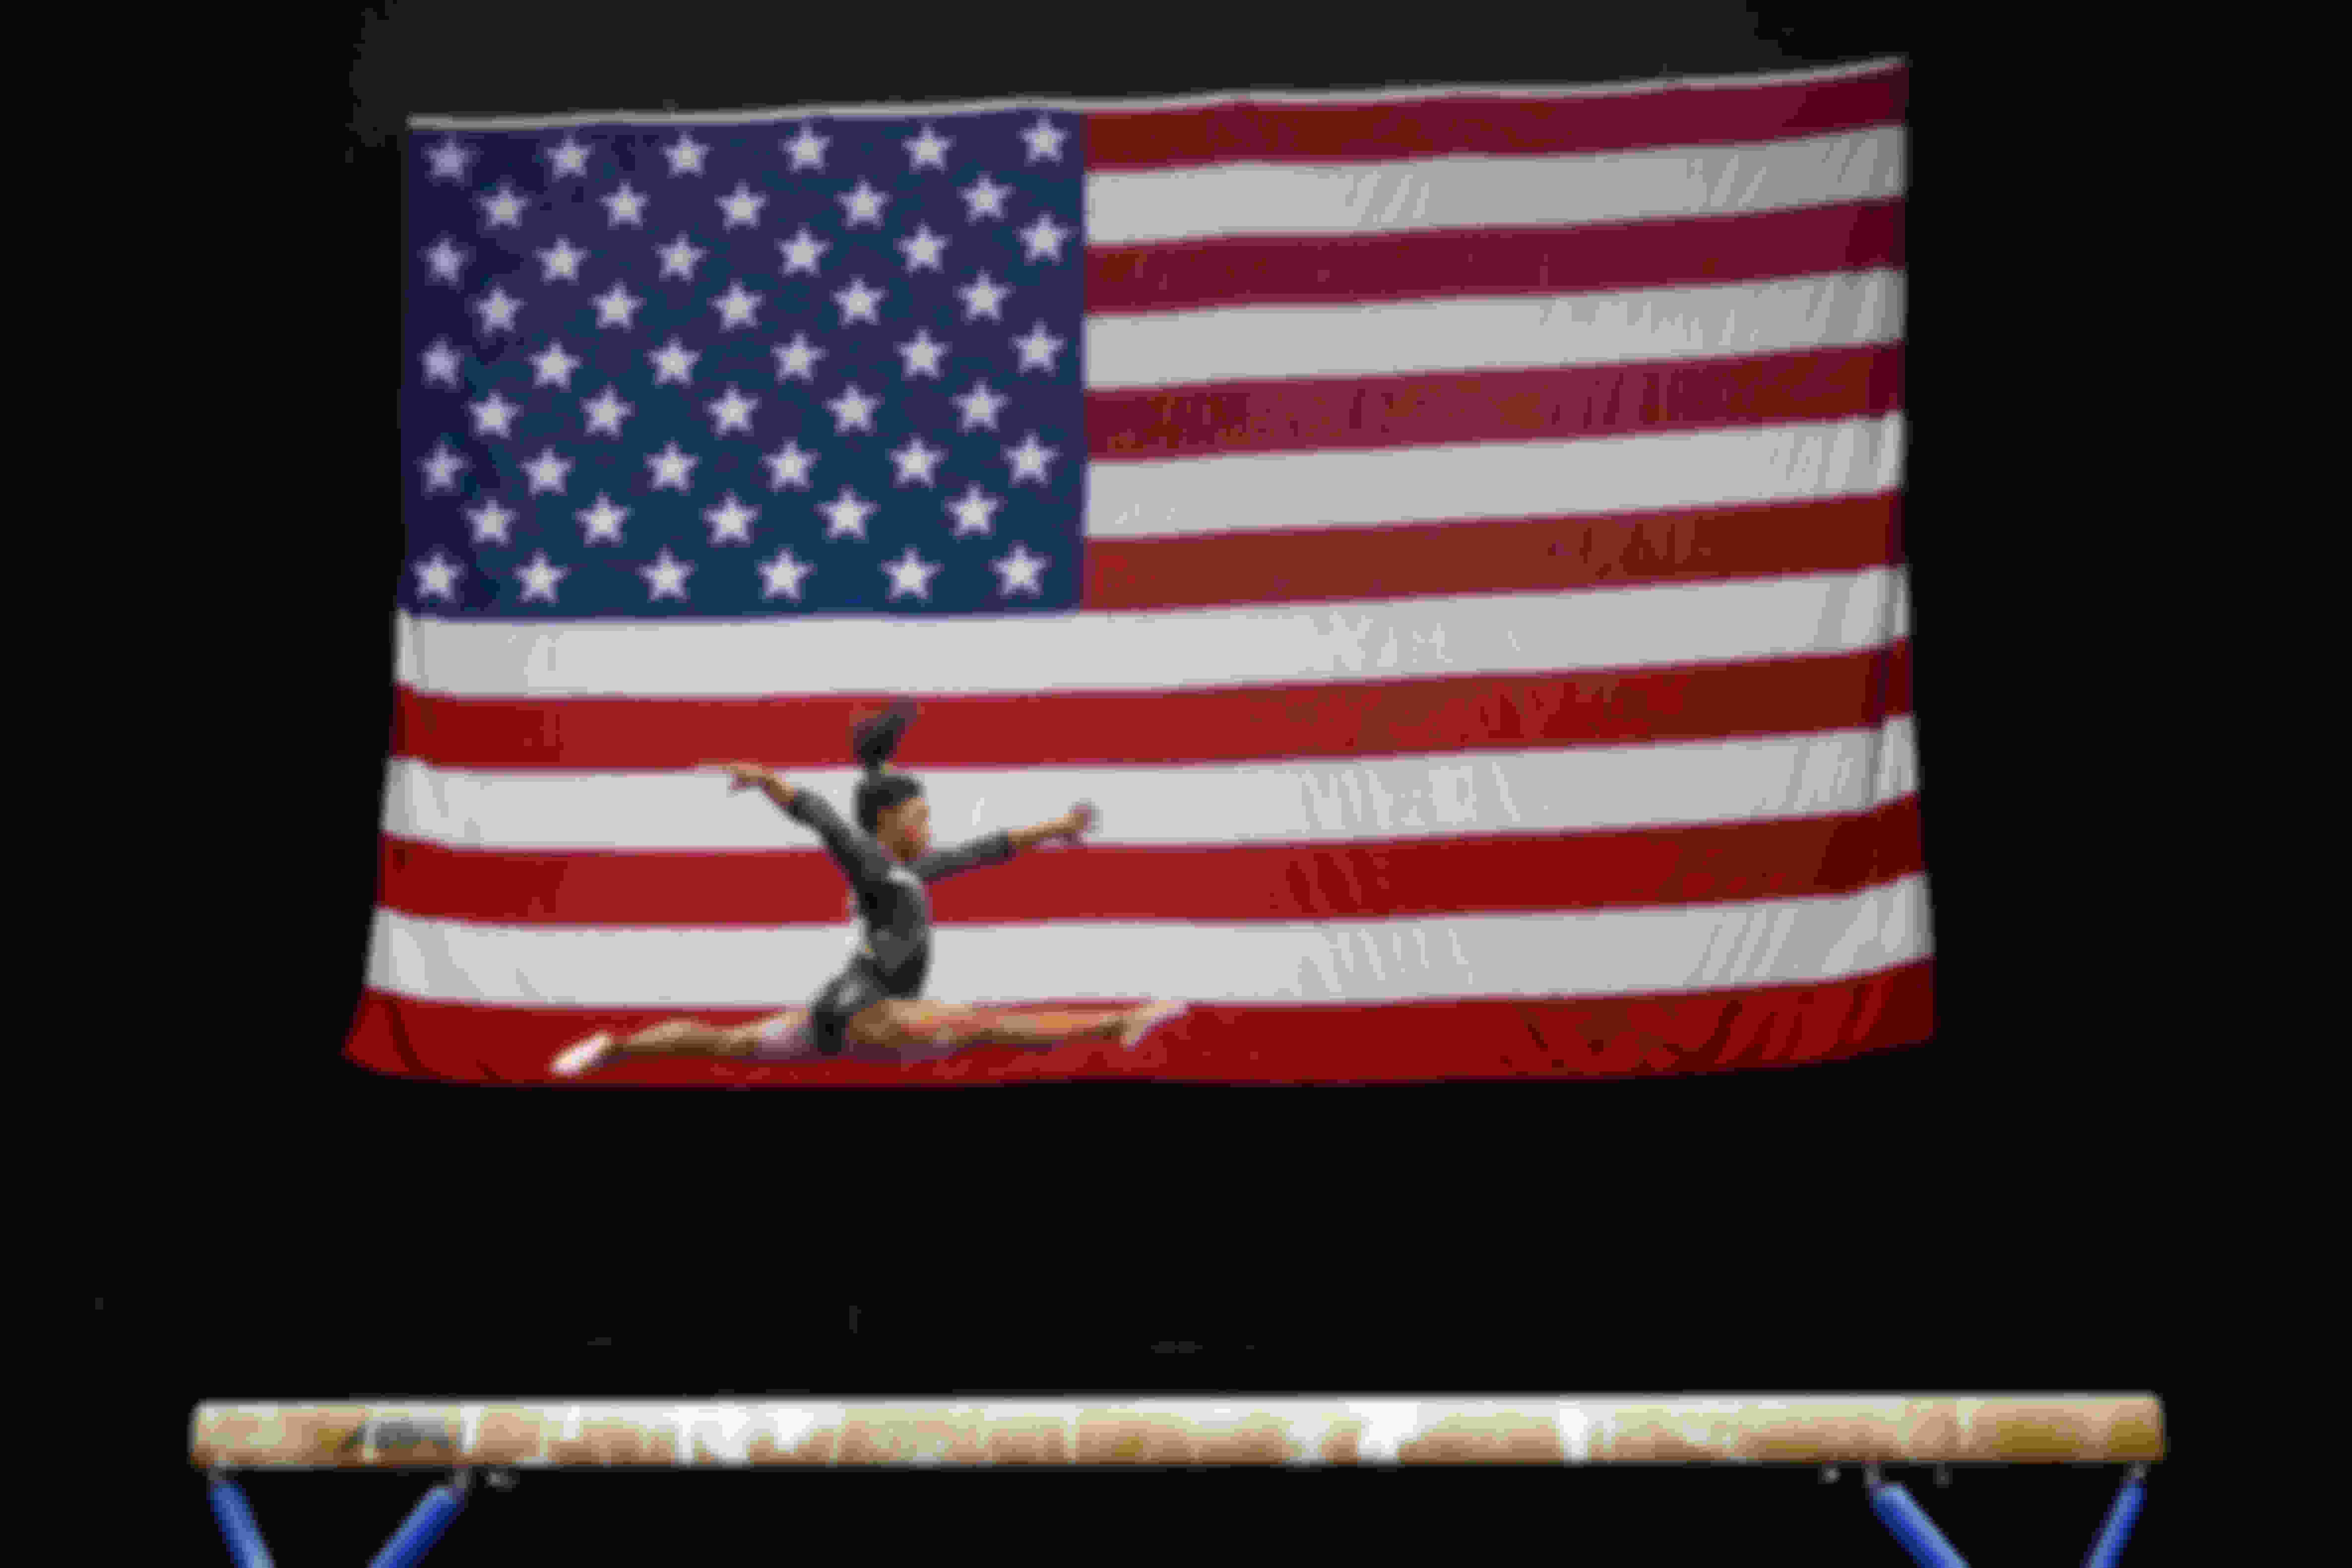 Simone Biles competes on the balance beam at the U.S. Gymnastics Championships in Boston